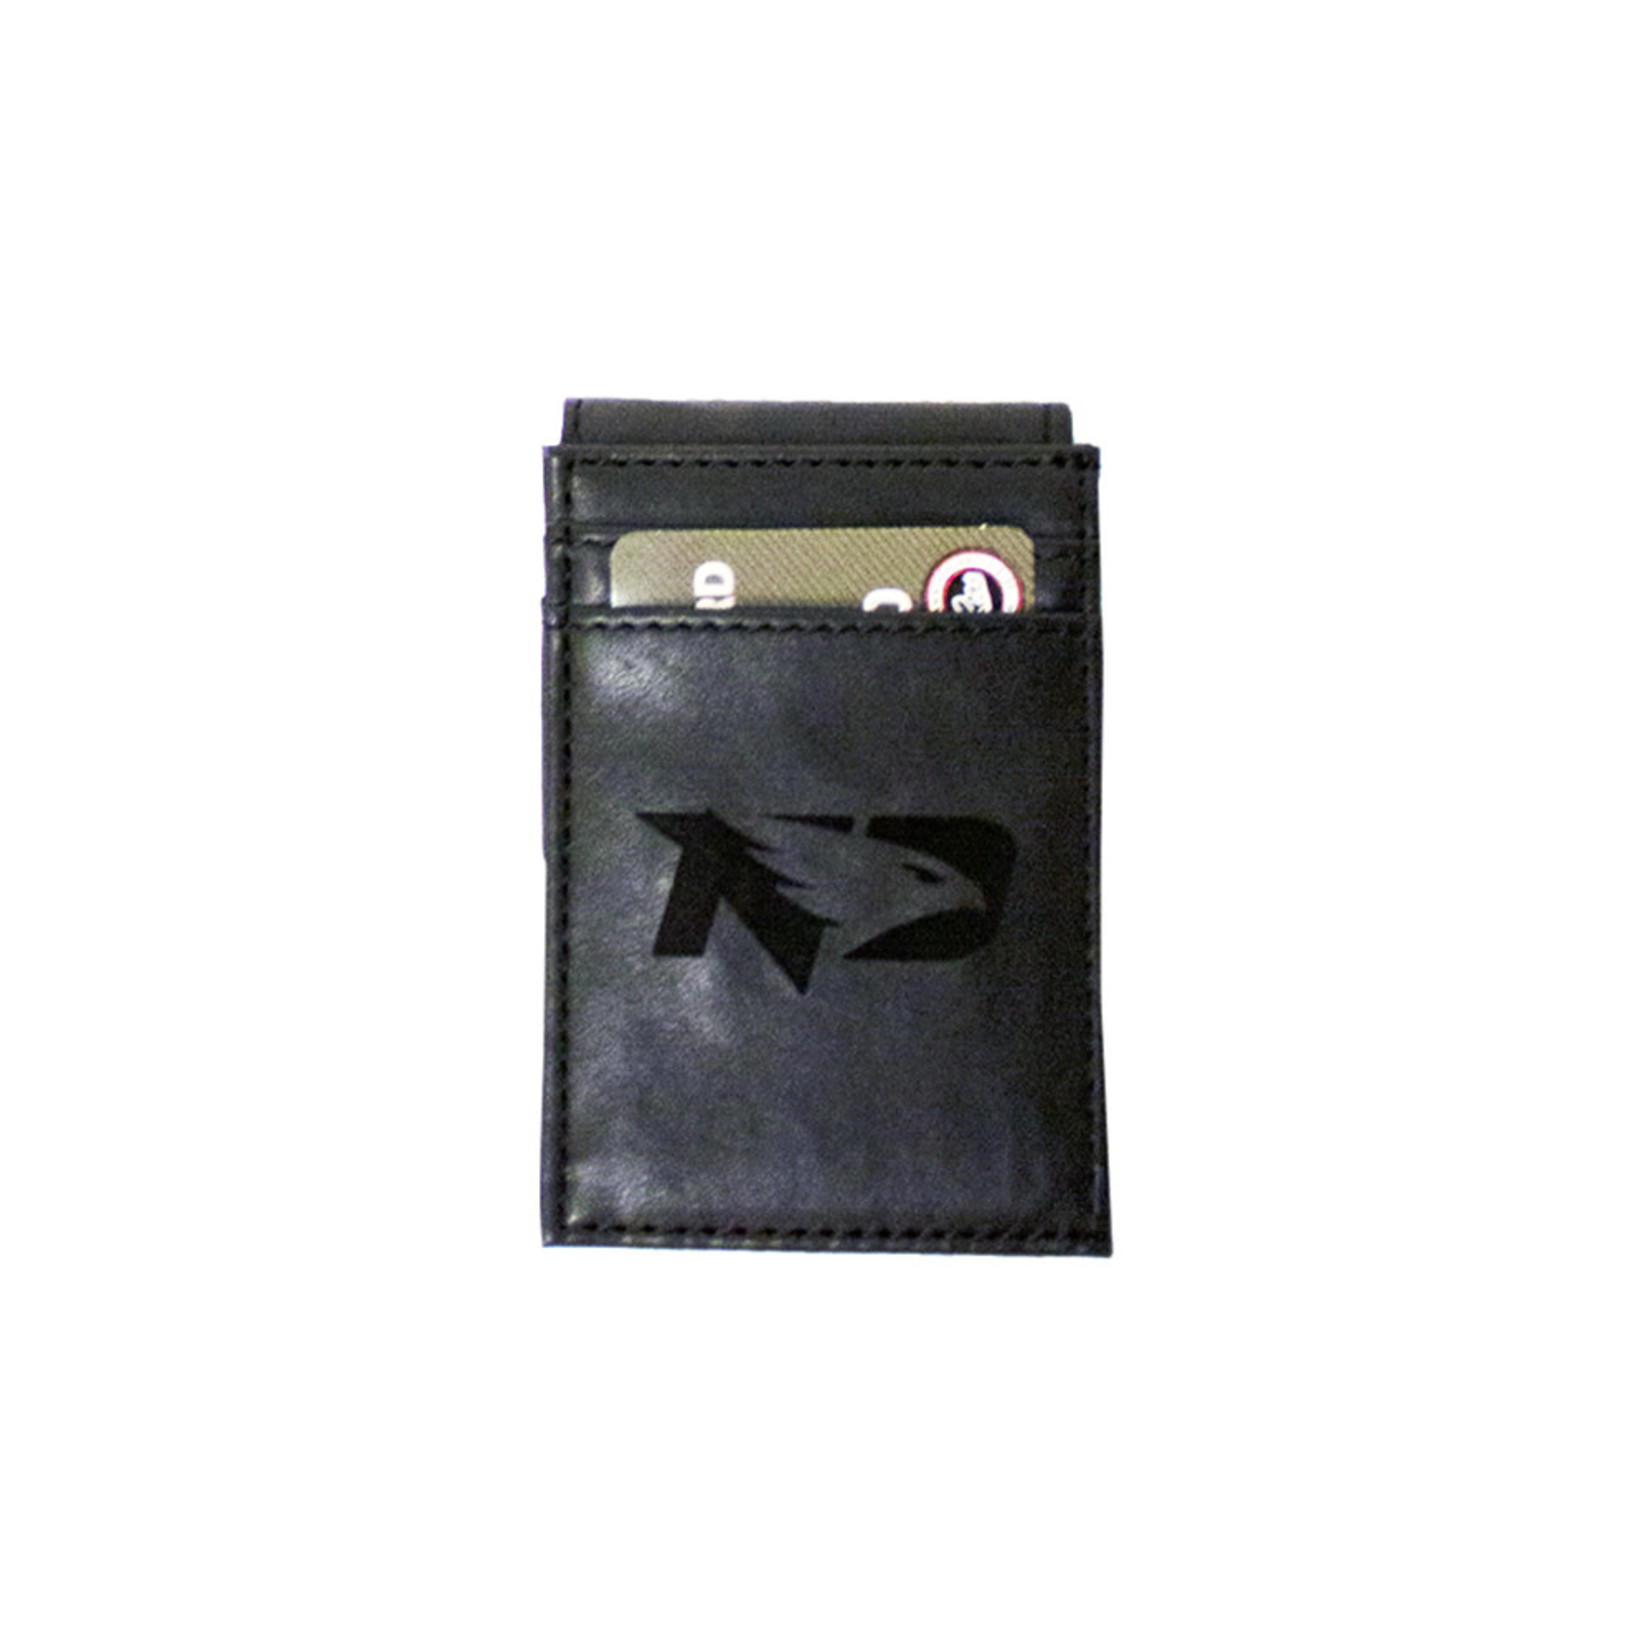 Hawks Front Pocket Wallet - Sioux Shop at Ralph Engelstad Arena